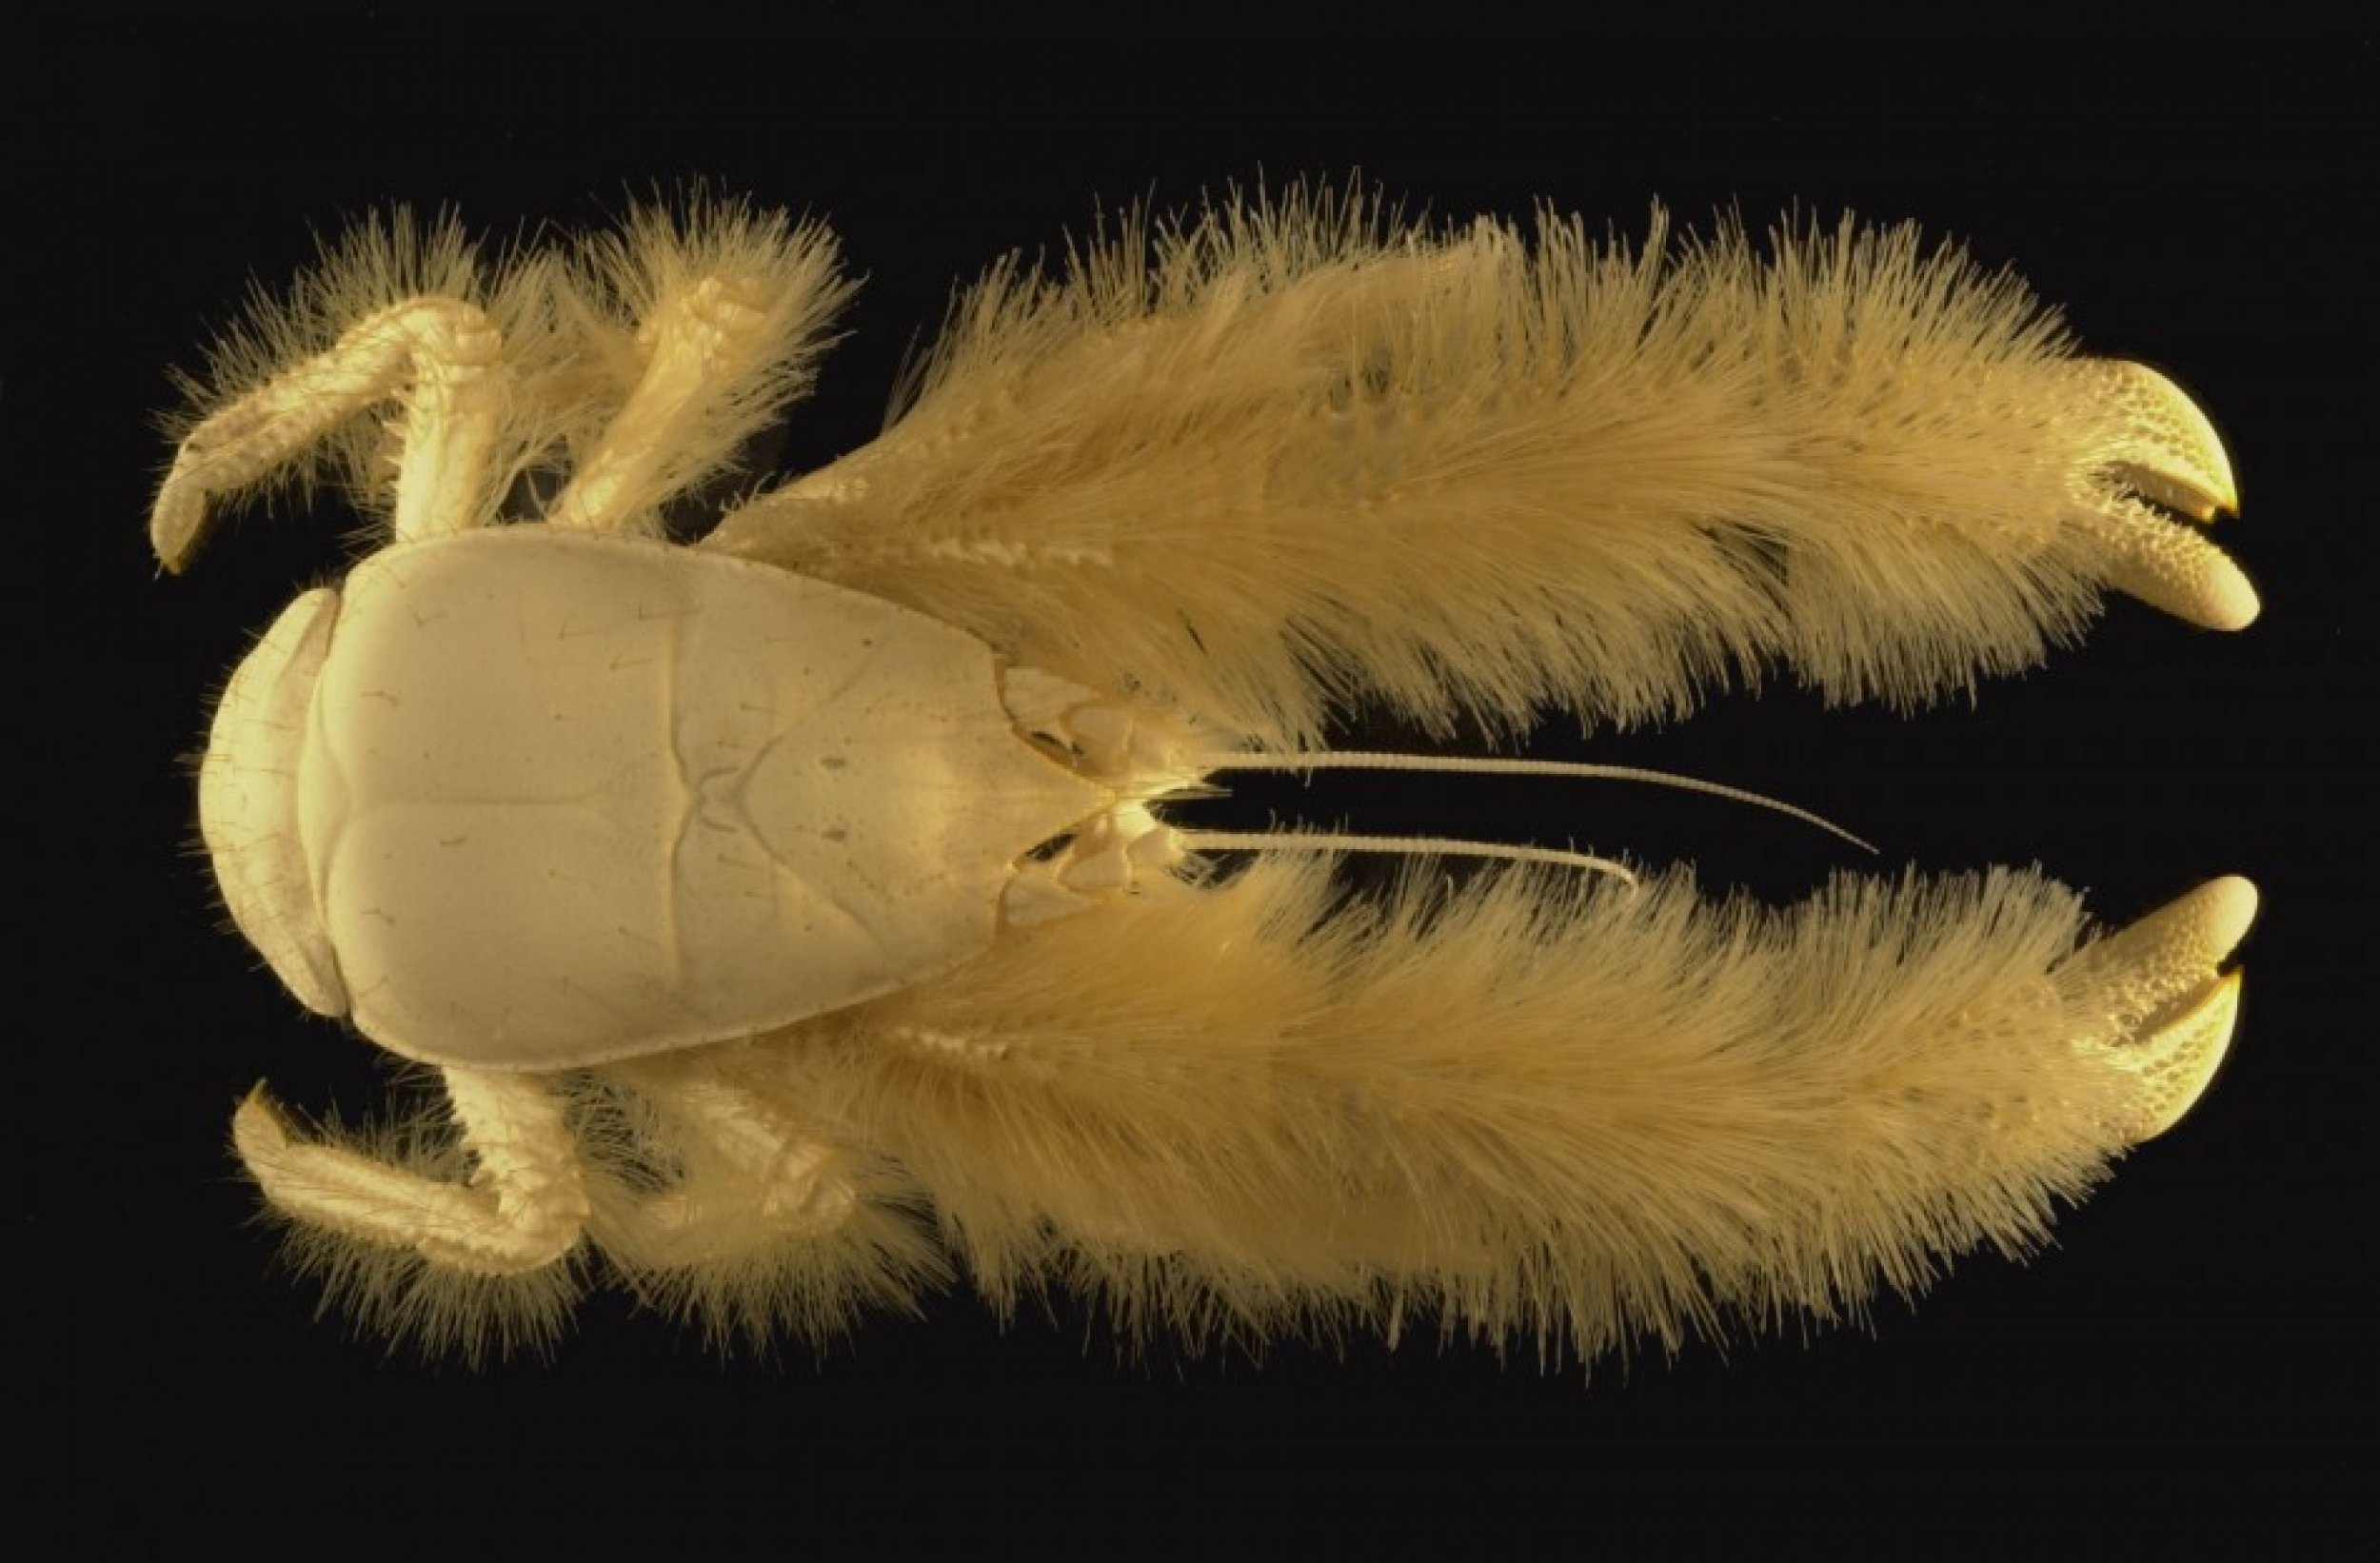 Kiwa hirsuta, also dubbed the yeti crab